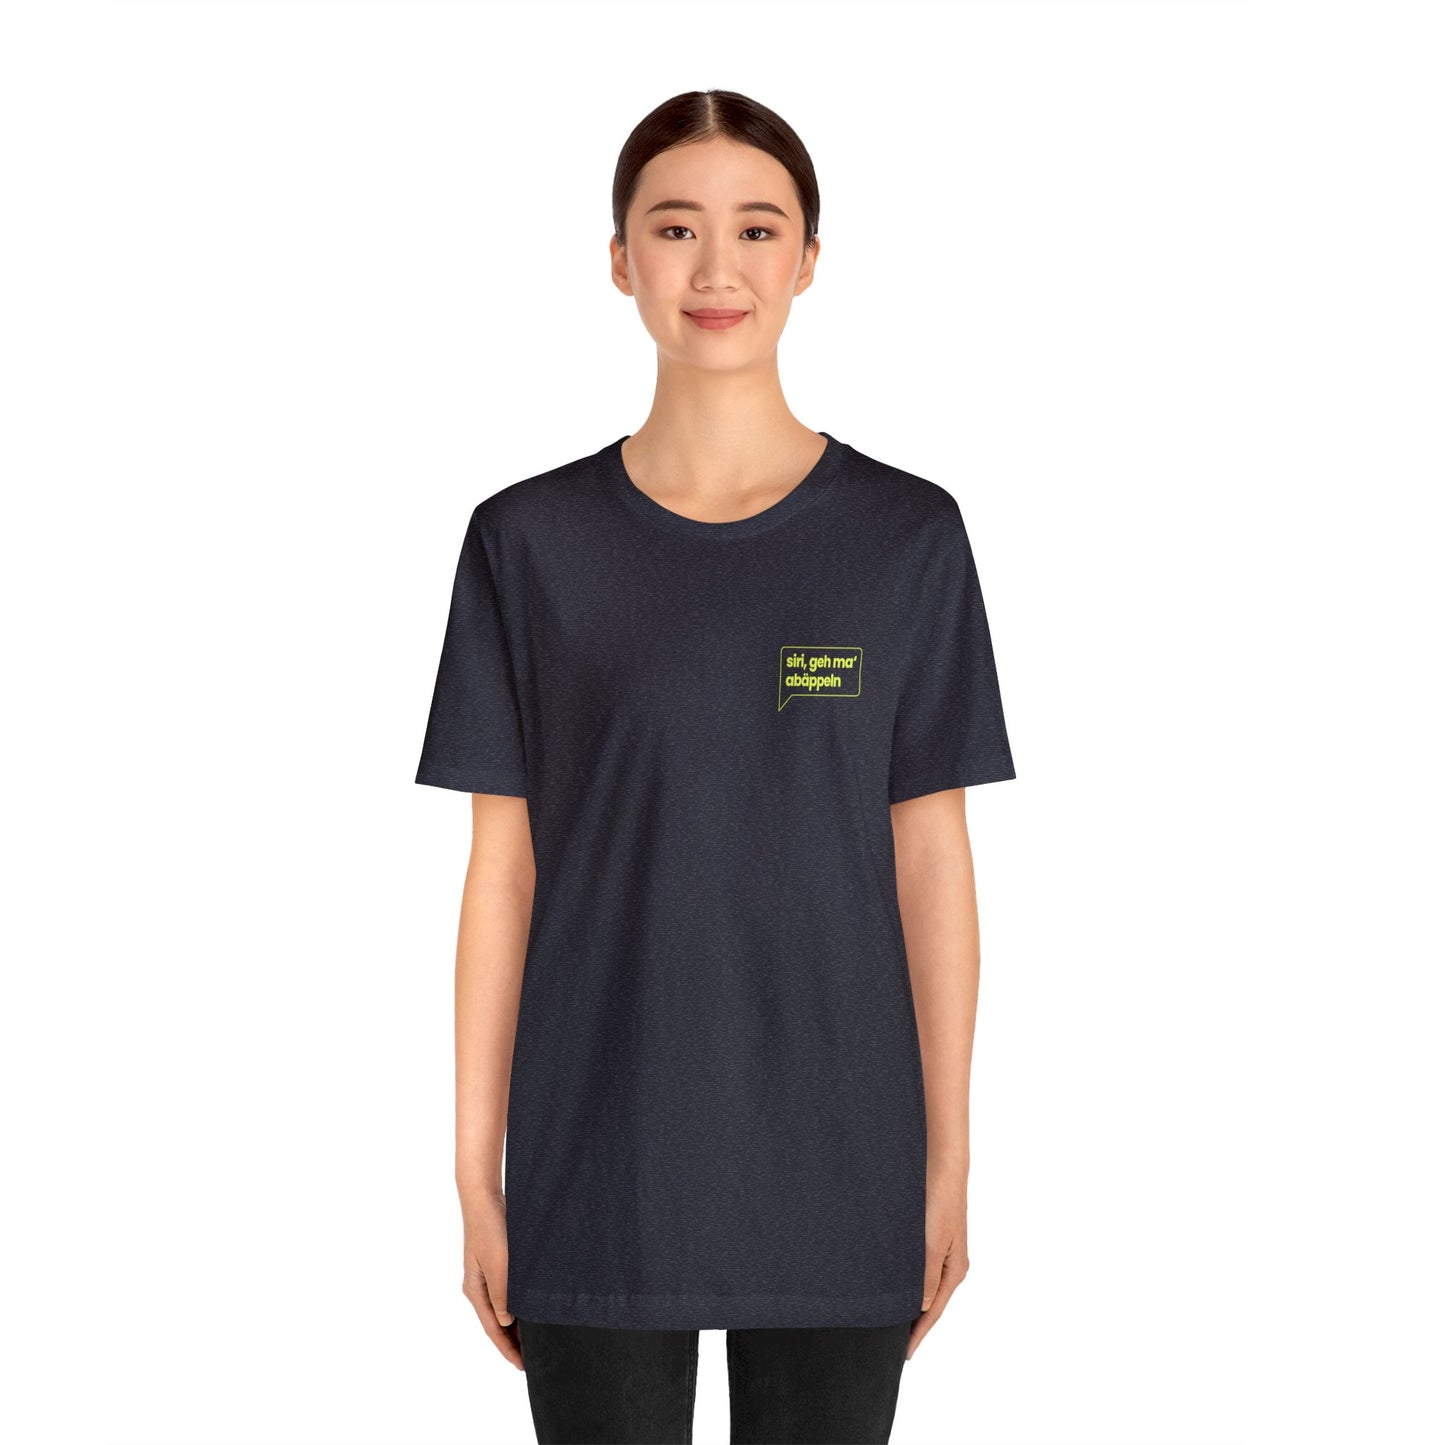 siri, geh ma' abäppeln – Unisex T-Shirt